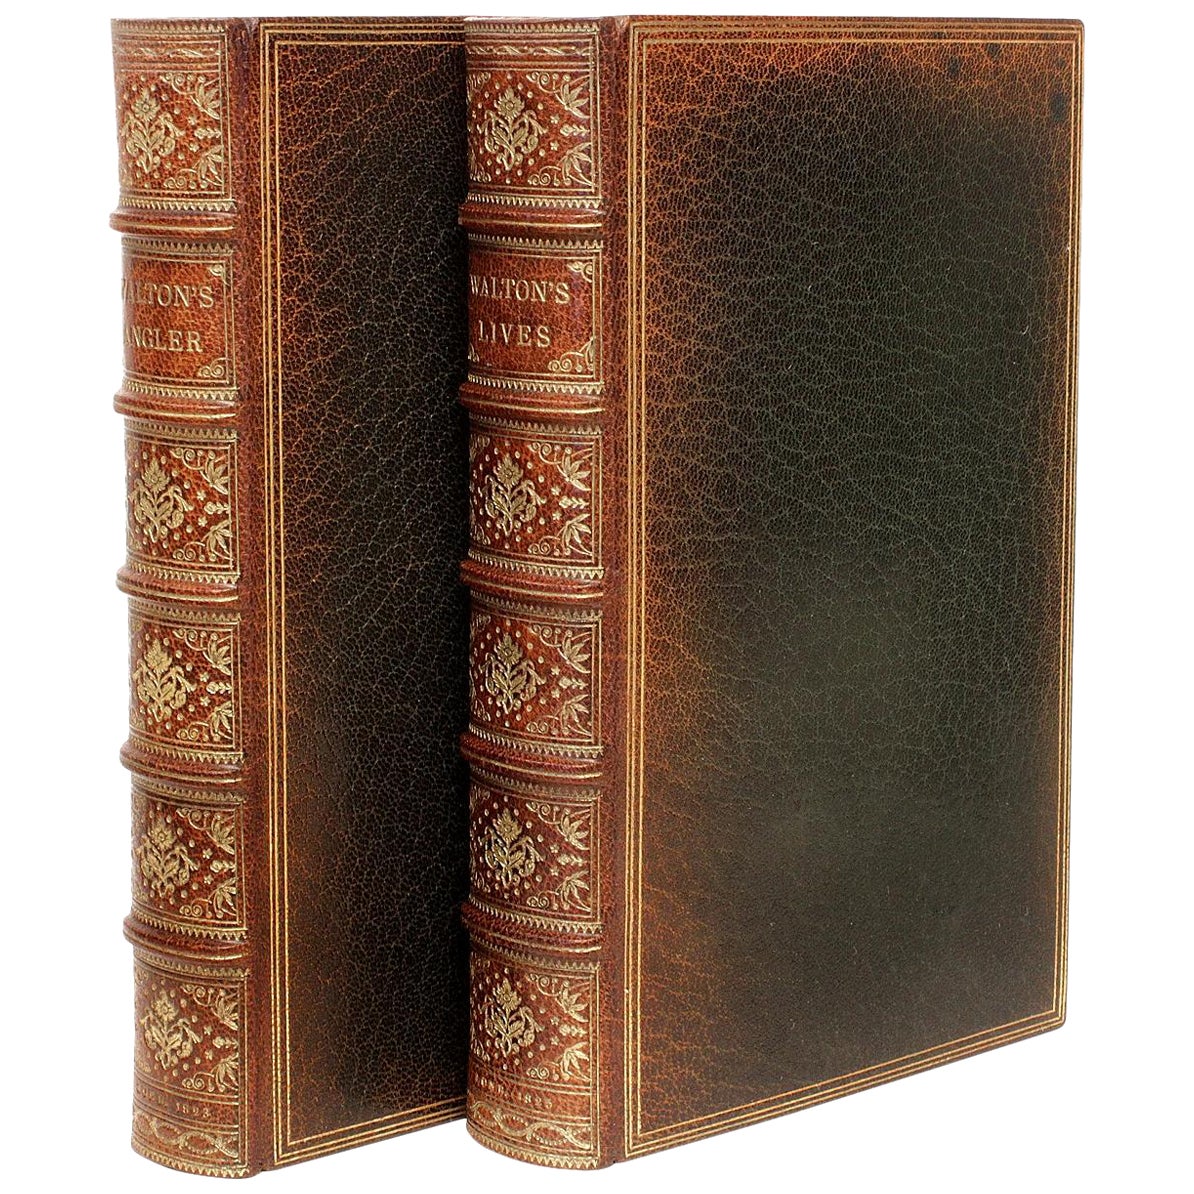 Izaak Walton, Complete Angler & Lives of John Donne – First John Major Editions